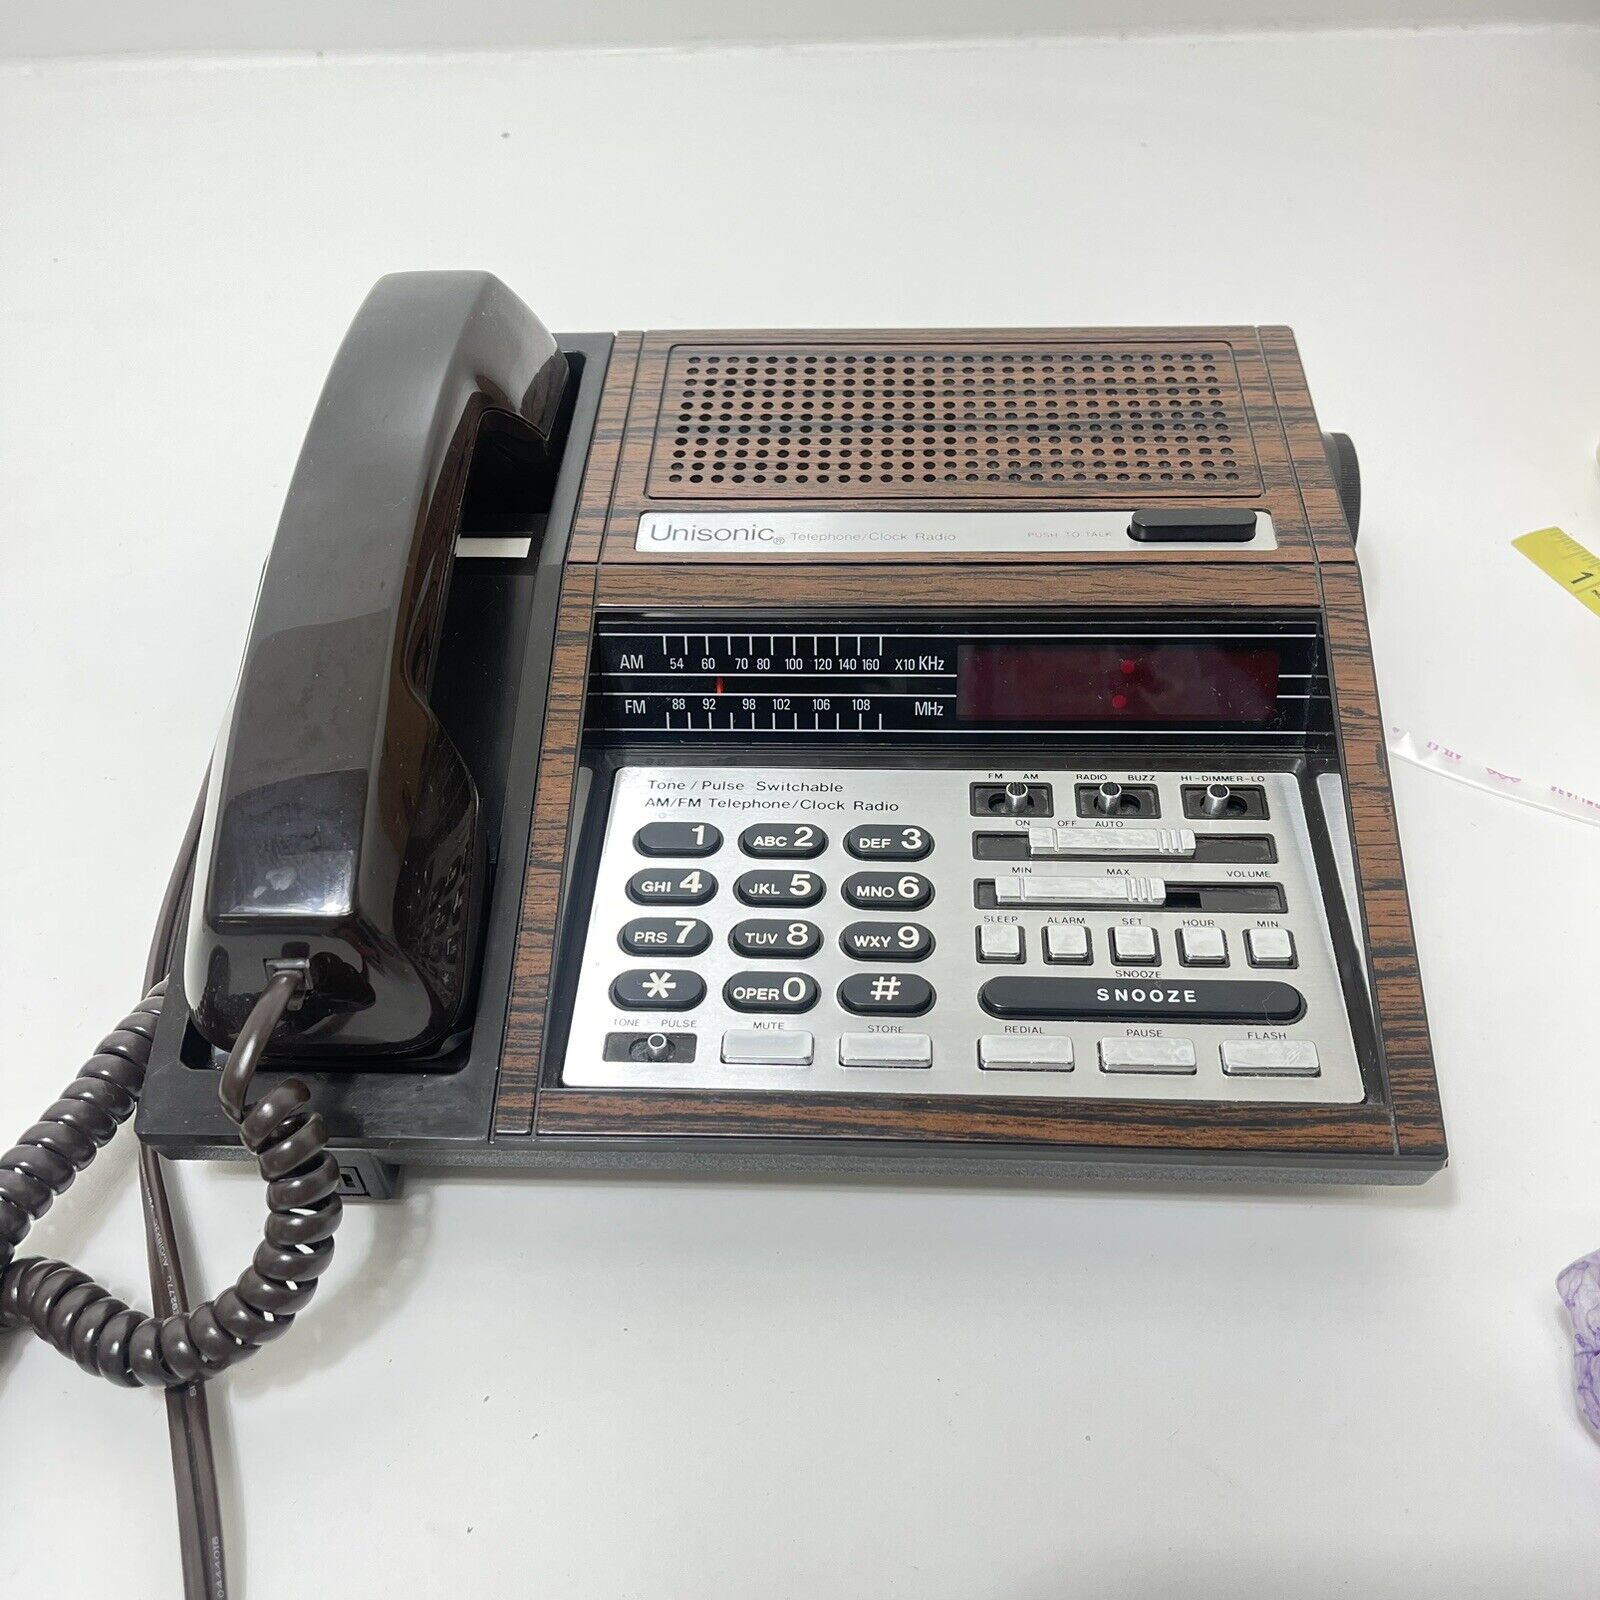 Vtg Unisonic Telephone Alarm Clock AM FM Dial Radio Model 6155 Wood Grain Tested